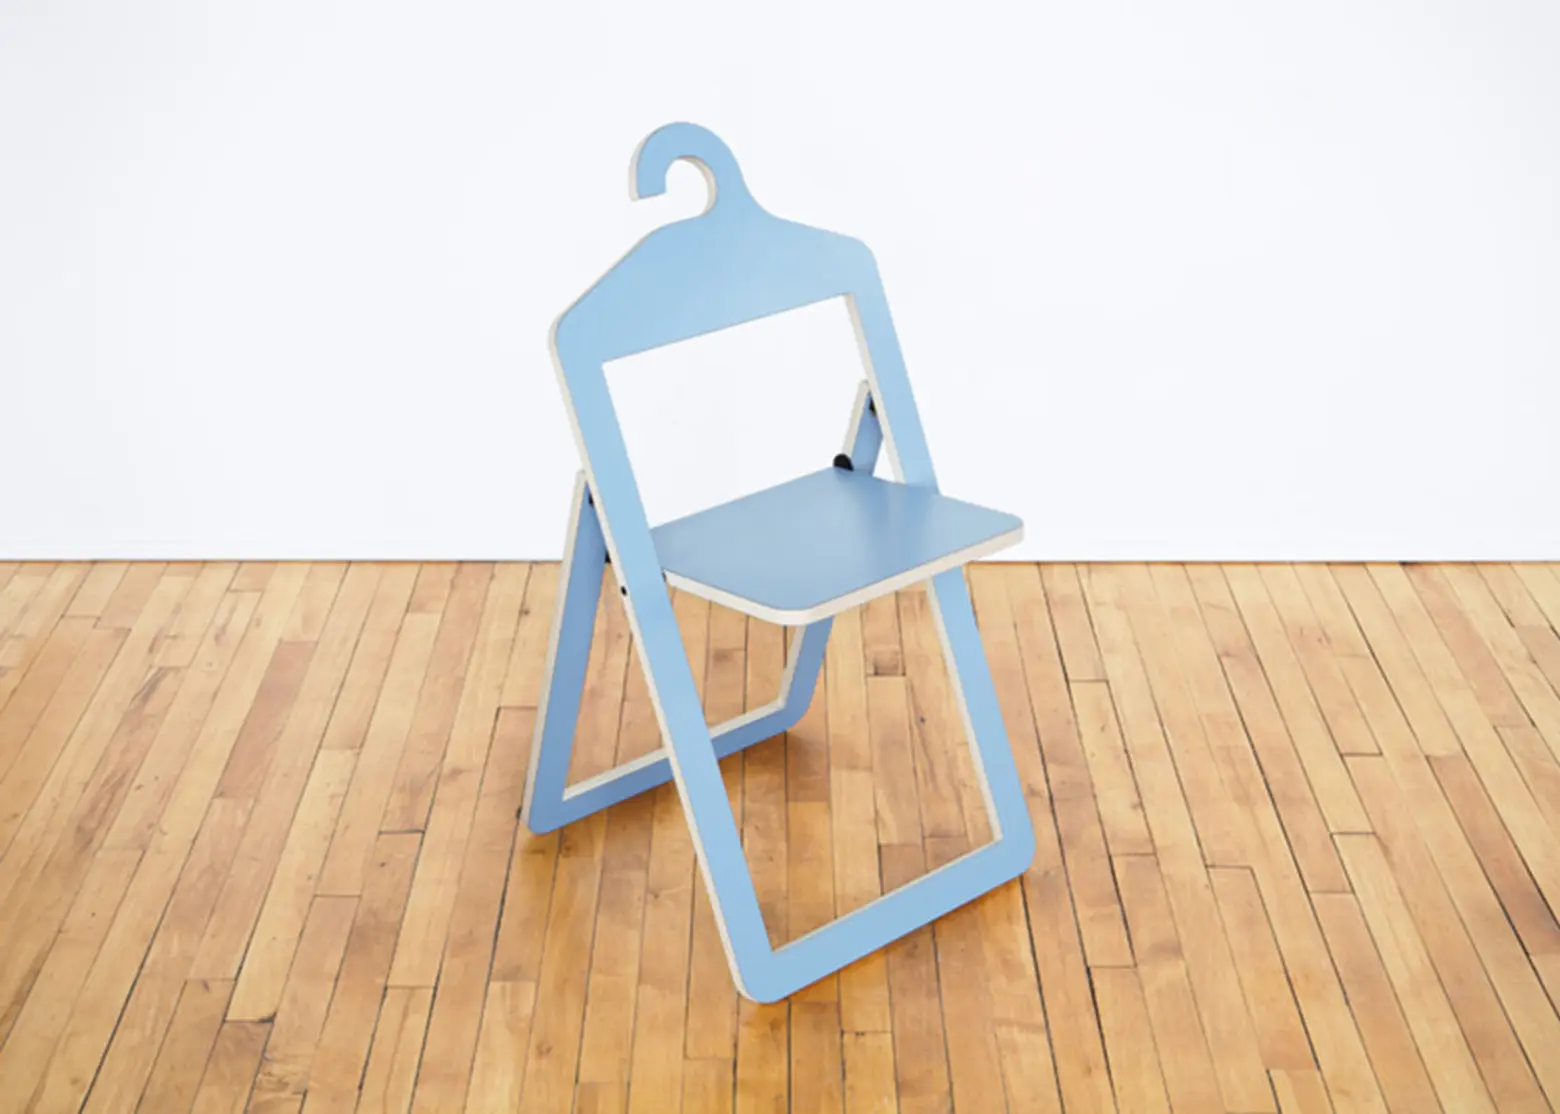 Philippe Malouin, hybrid design, wooden chair, Hanger Chair, Umbra Shift, ICFF, Design Academy Eindhoven